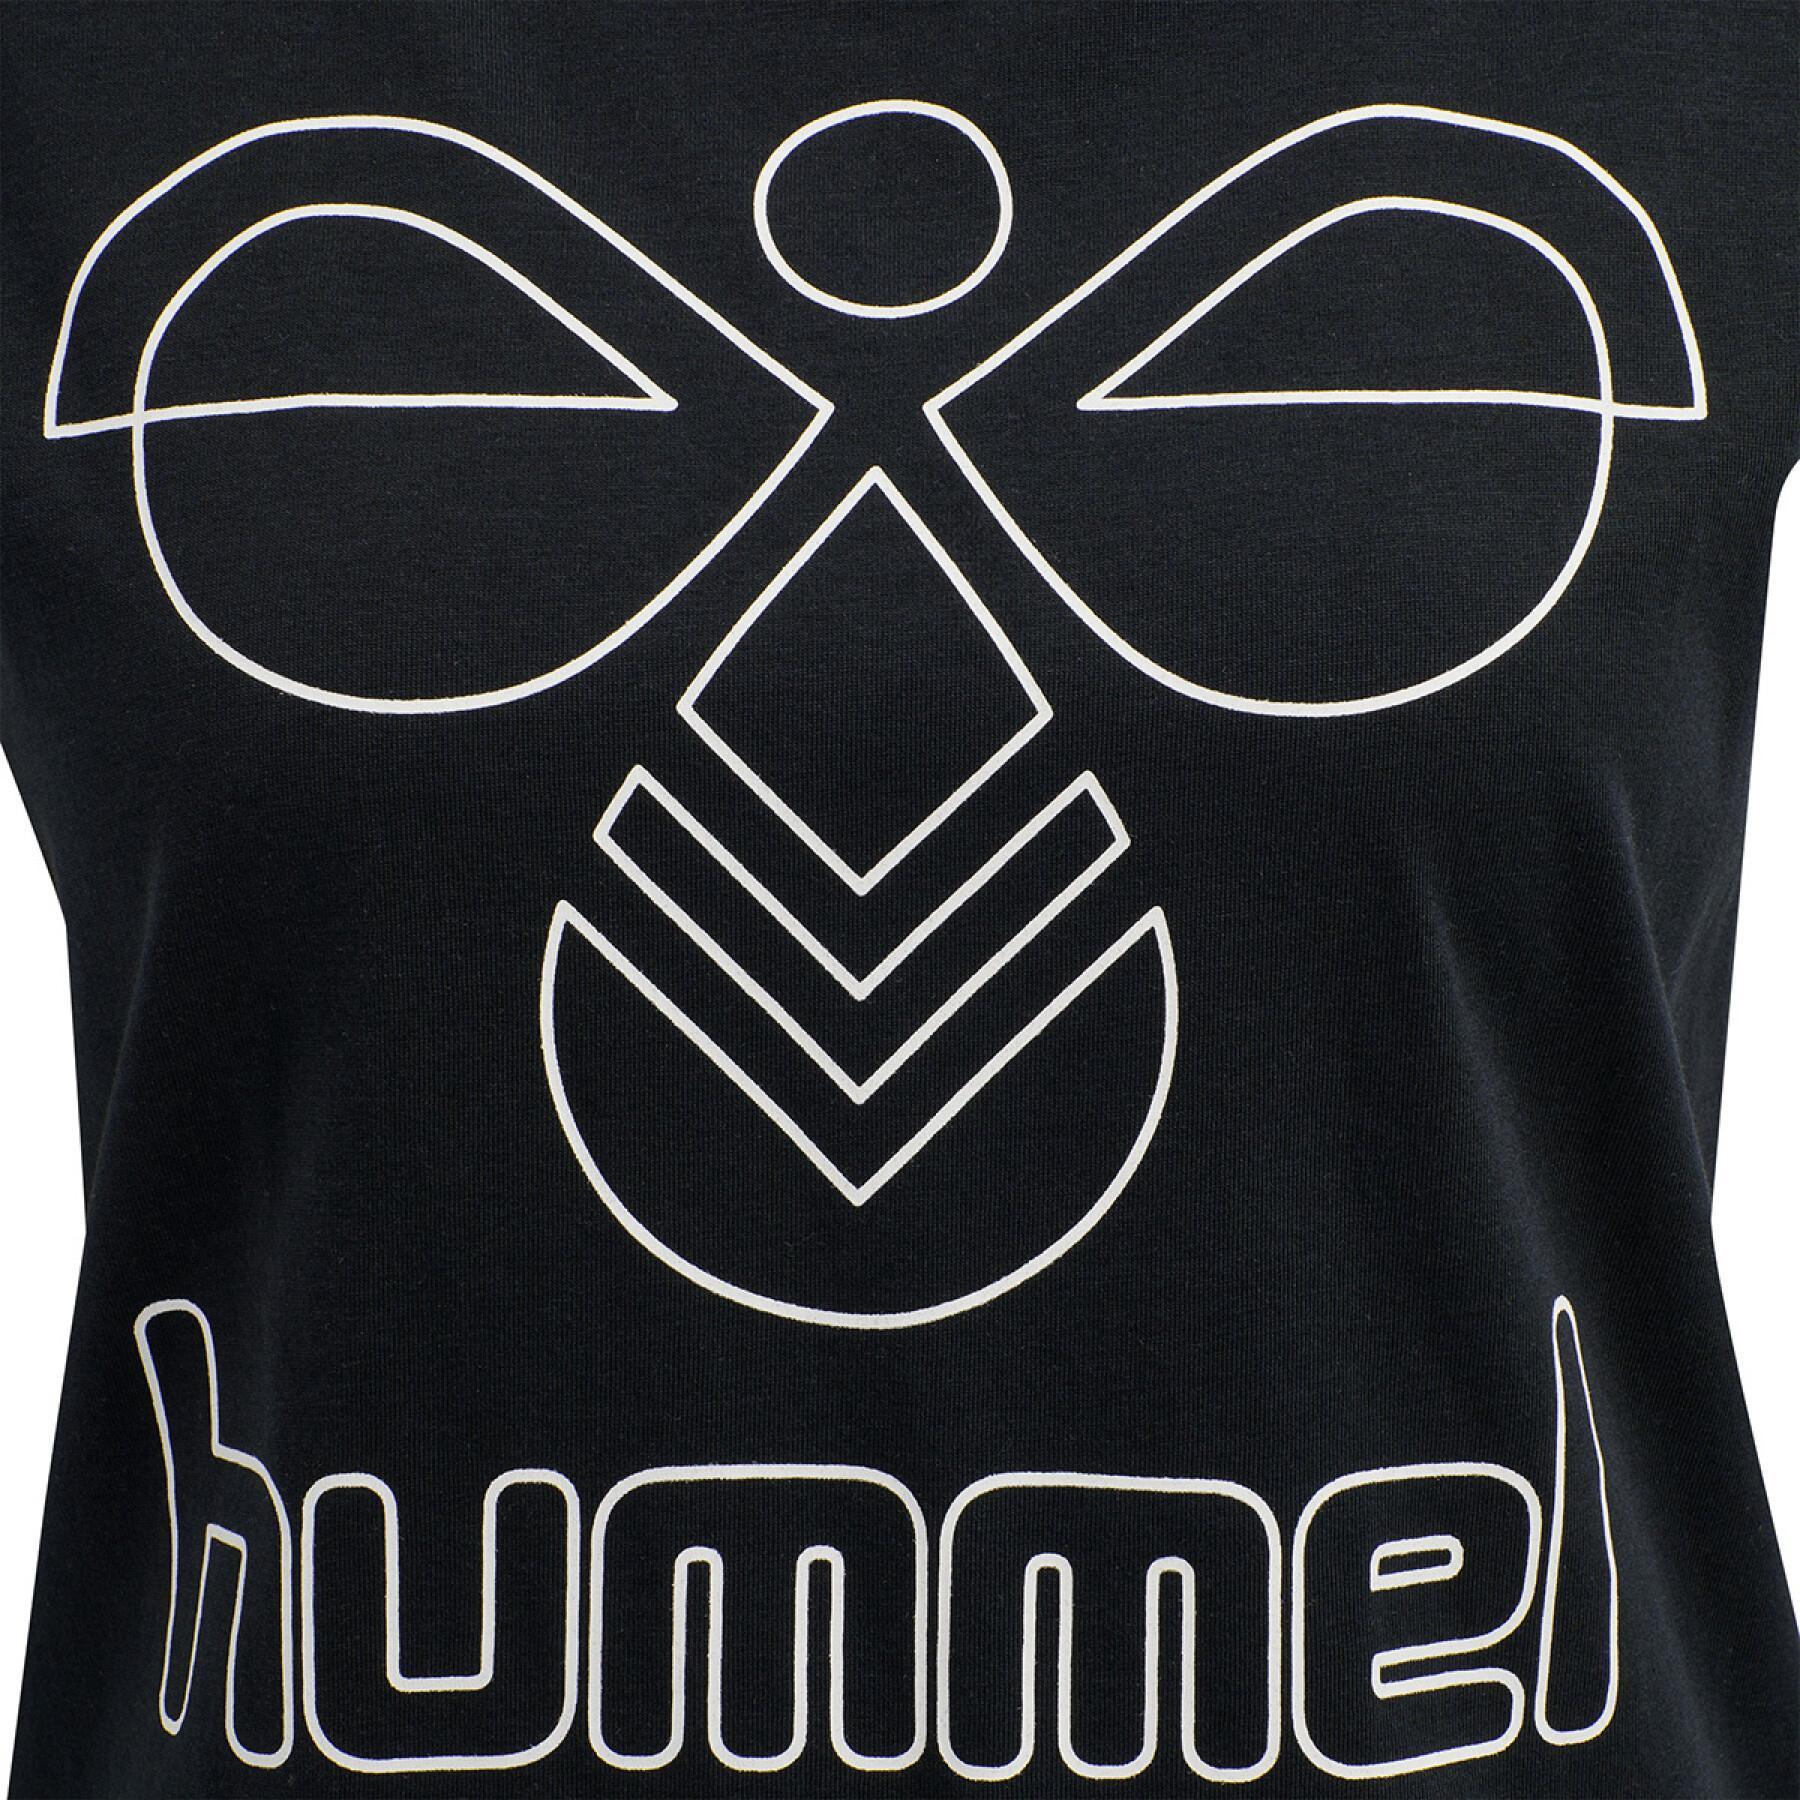 Dames-T-shirt Hummel hmlsenga